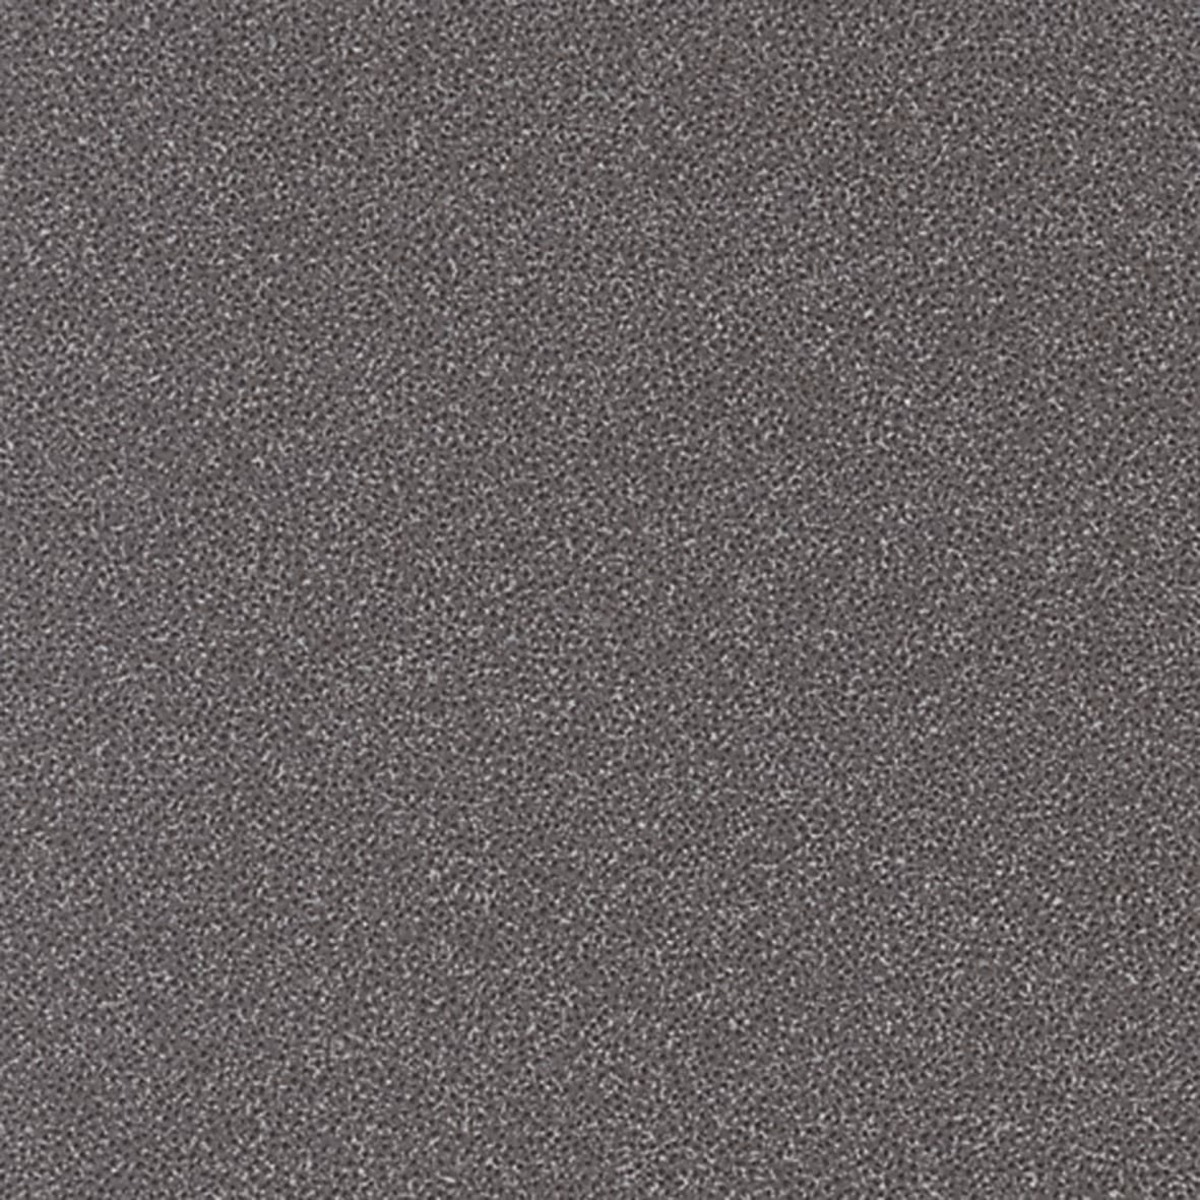 Dlažba Rako Taurus Granit černá 20x20 cm protiskluz TRM25069.1 Rako